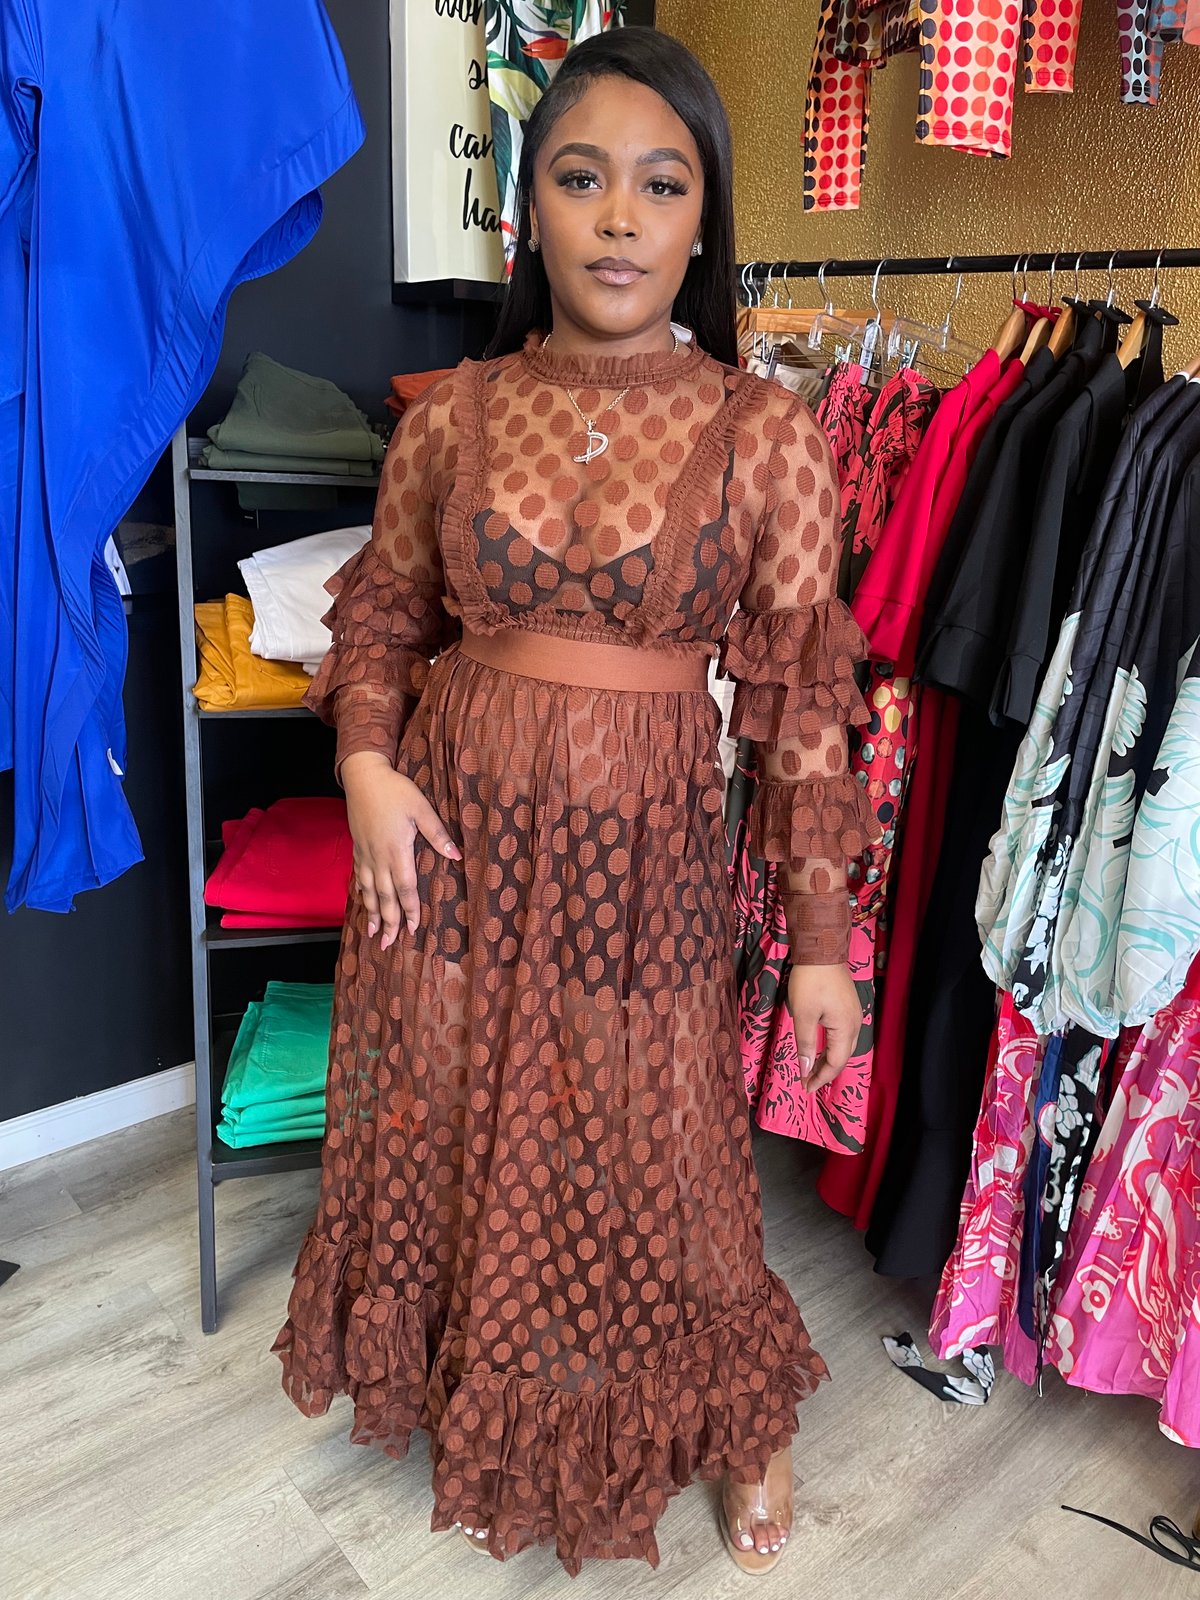 Brown Sheer Dress / U Gotta Have It Boutique